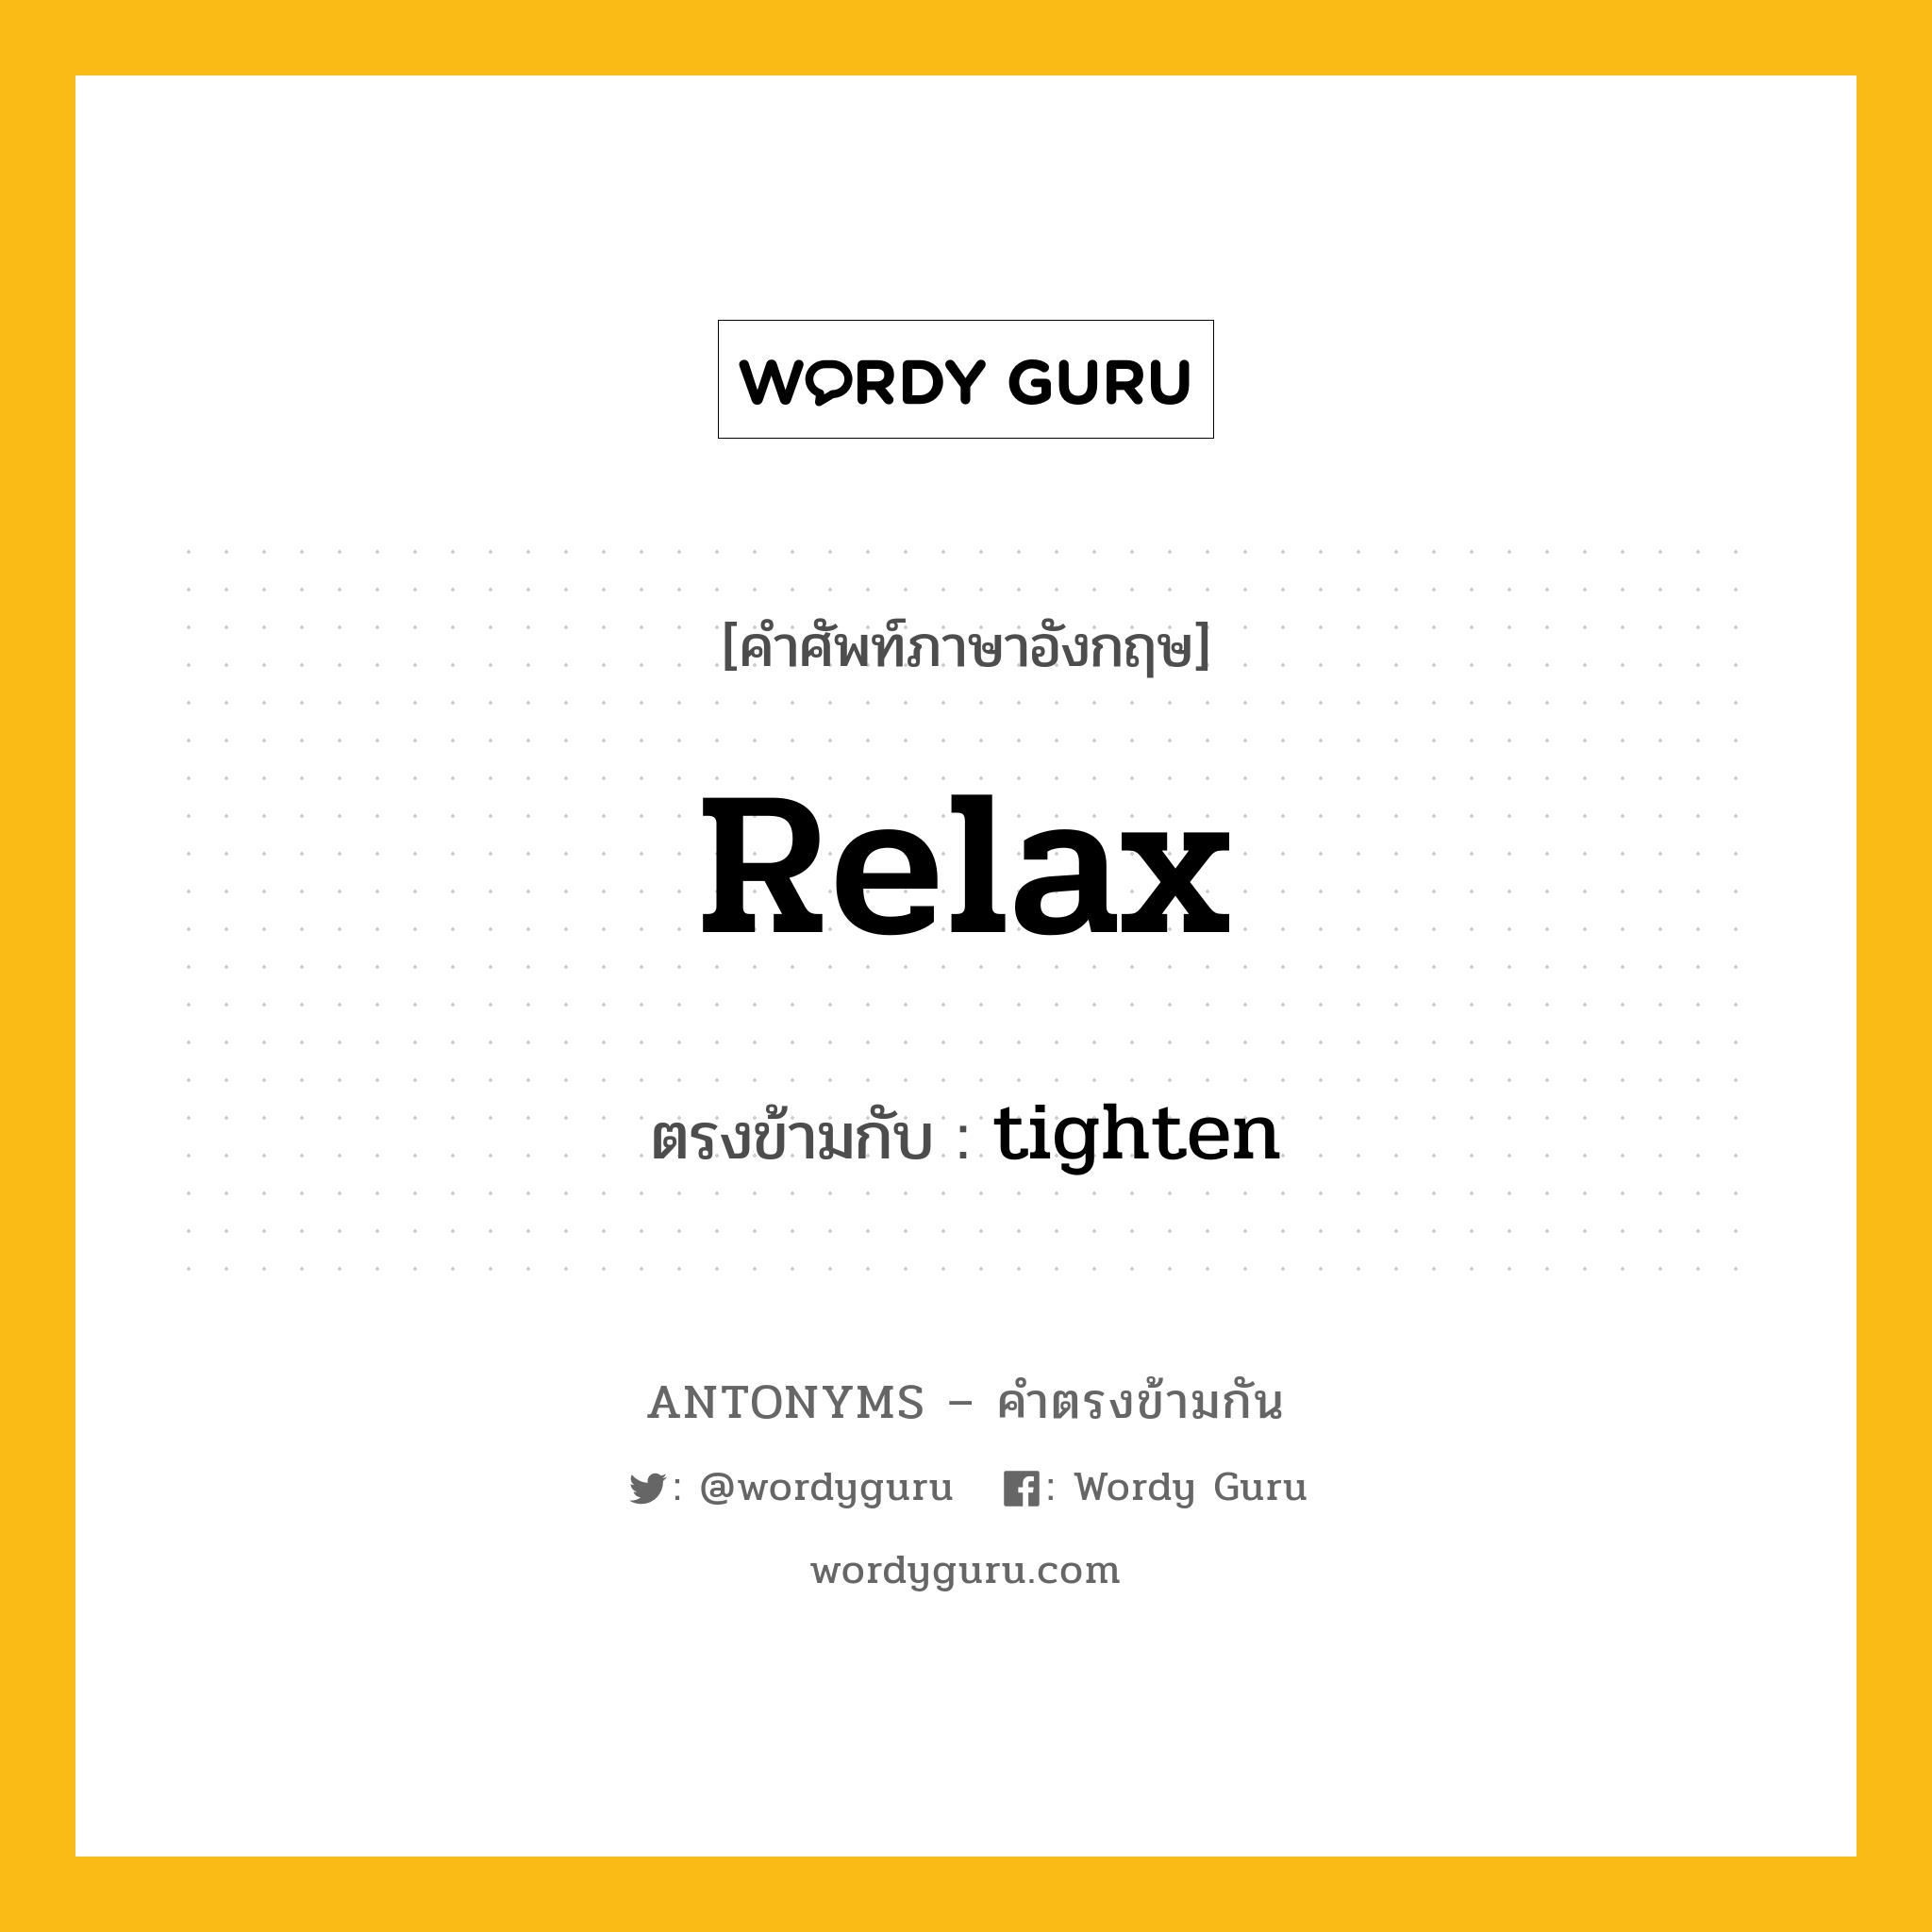 relax เป็นคำตรงข้ามกับคำไหนบ้าง?, คำศัพท์ภาษาอังกฤษ relax ตรงข้ามกับ tighten หมวด tighten